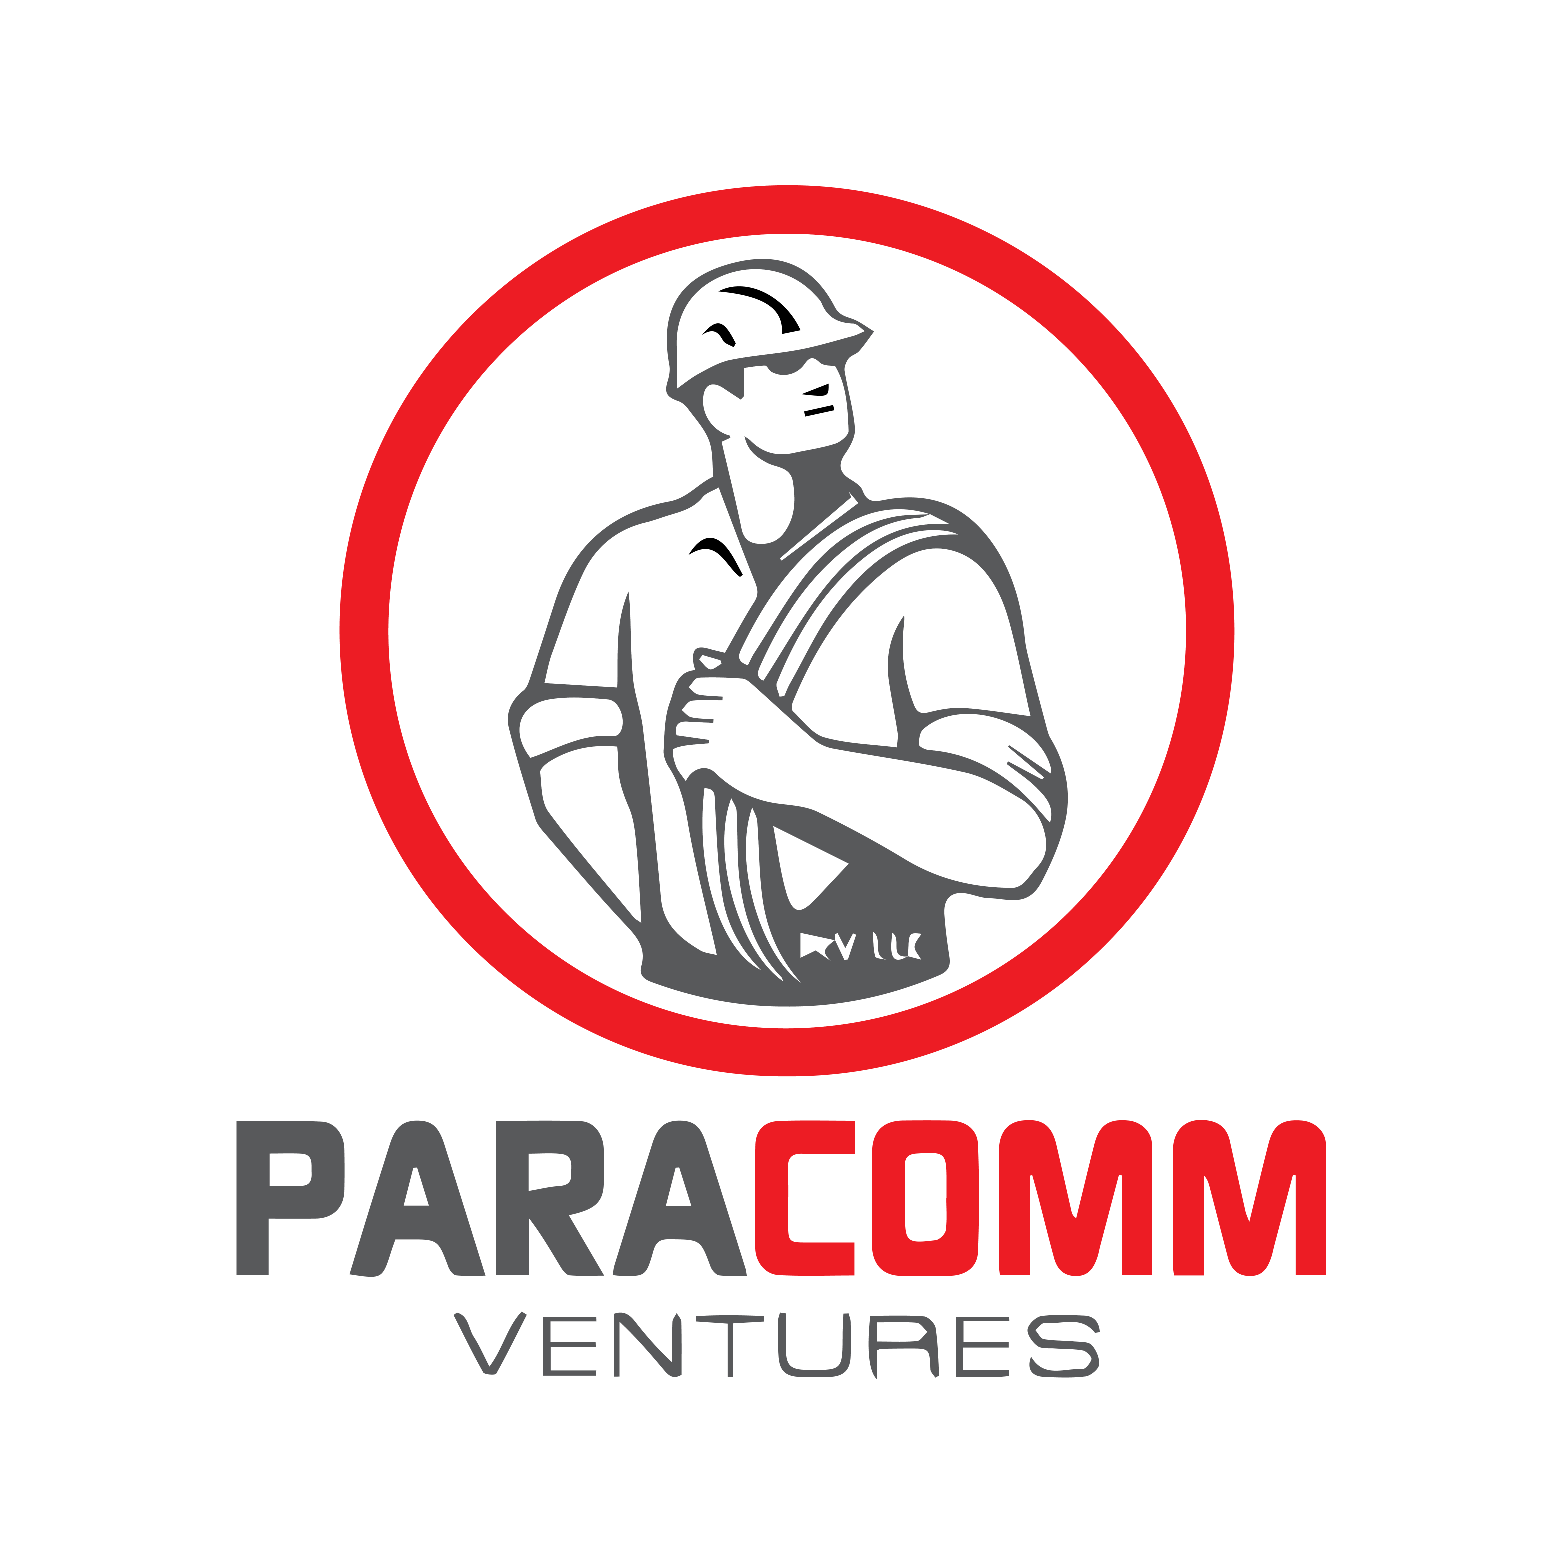 PARACOMM VENTURES, LLC.